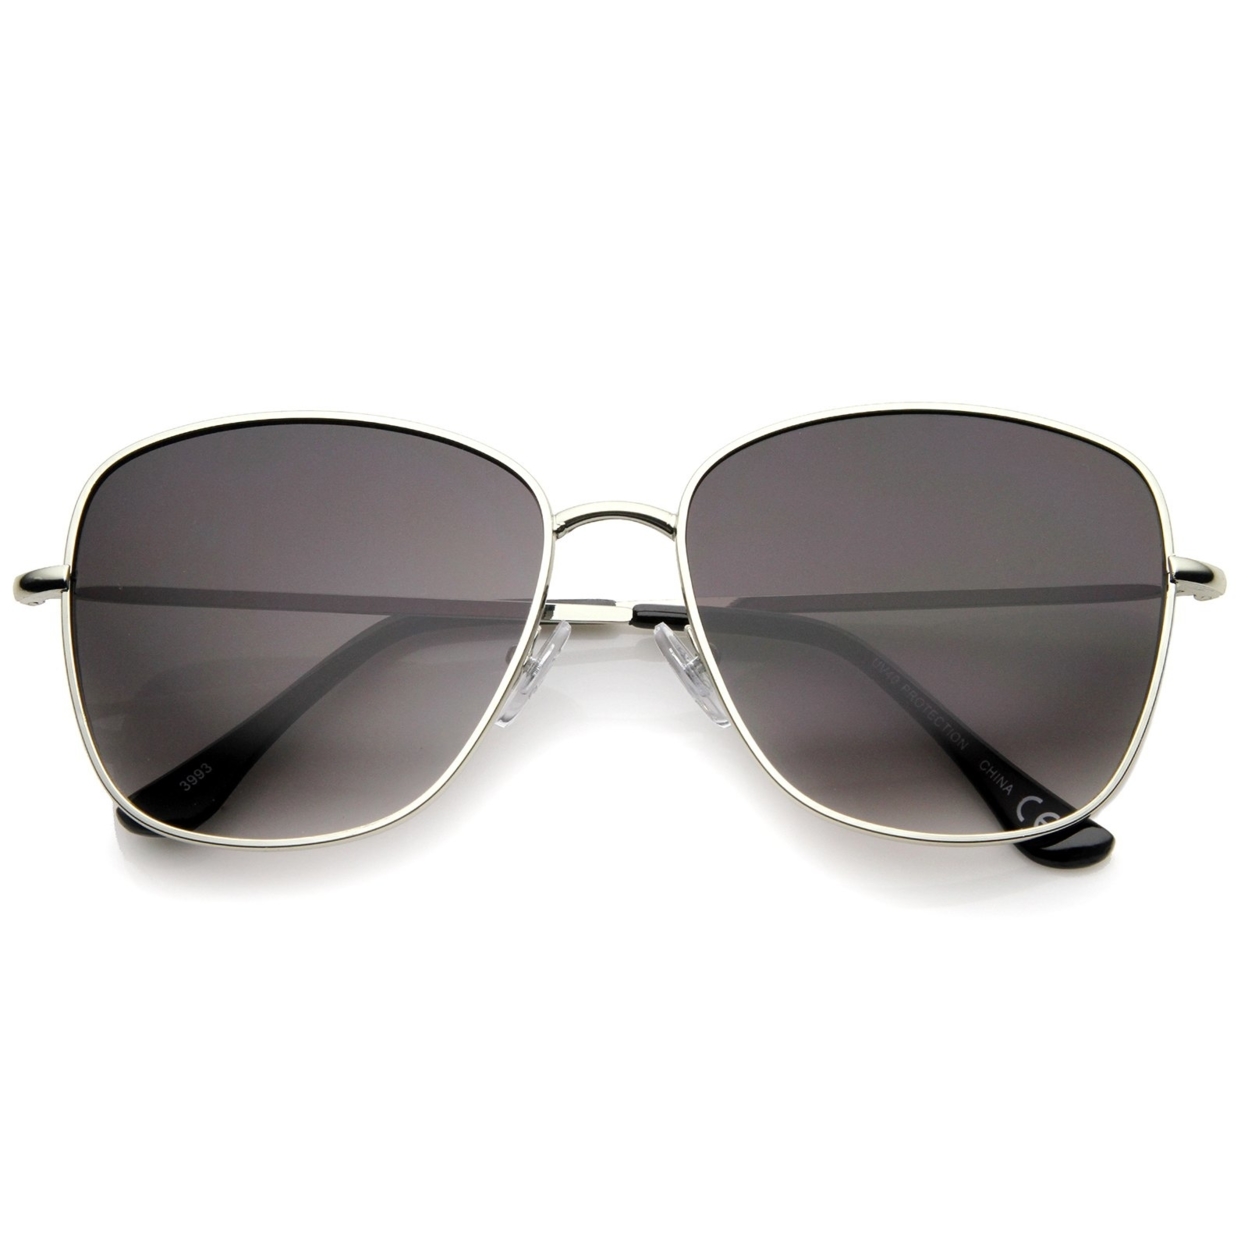 Contemporary Modern Fashion Full Metal Slim Temple Square Sunglasses 57mm - Shiny Silver / Lavender